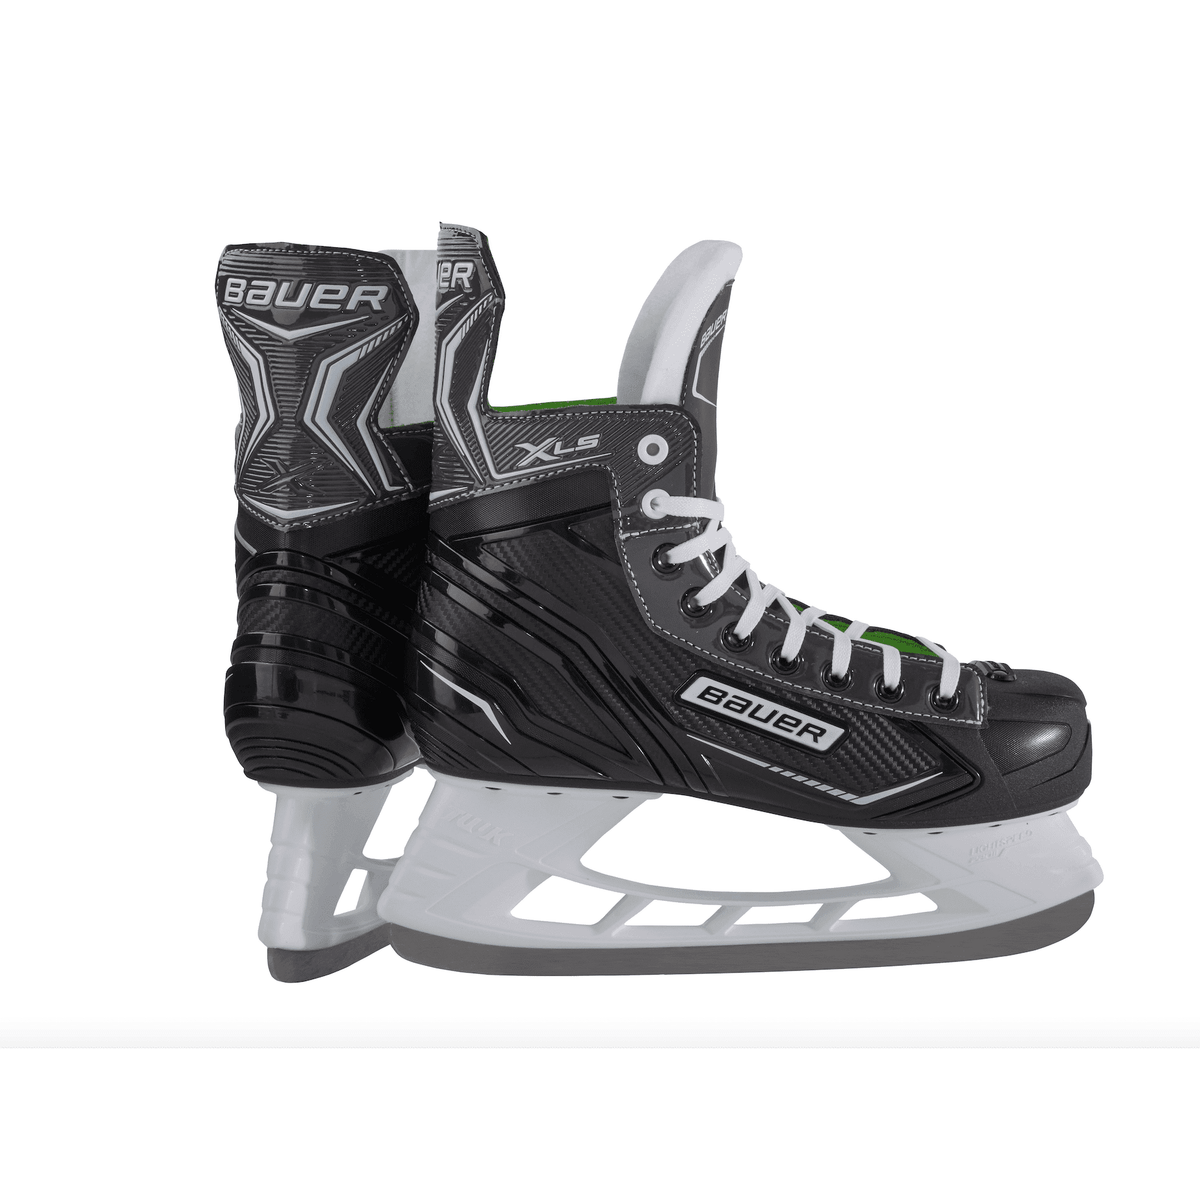 Bauer S21 X-LS Ice Hockey Skates